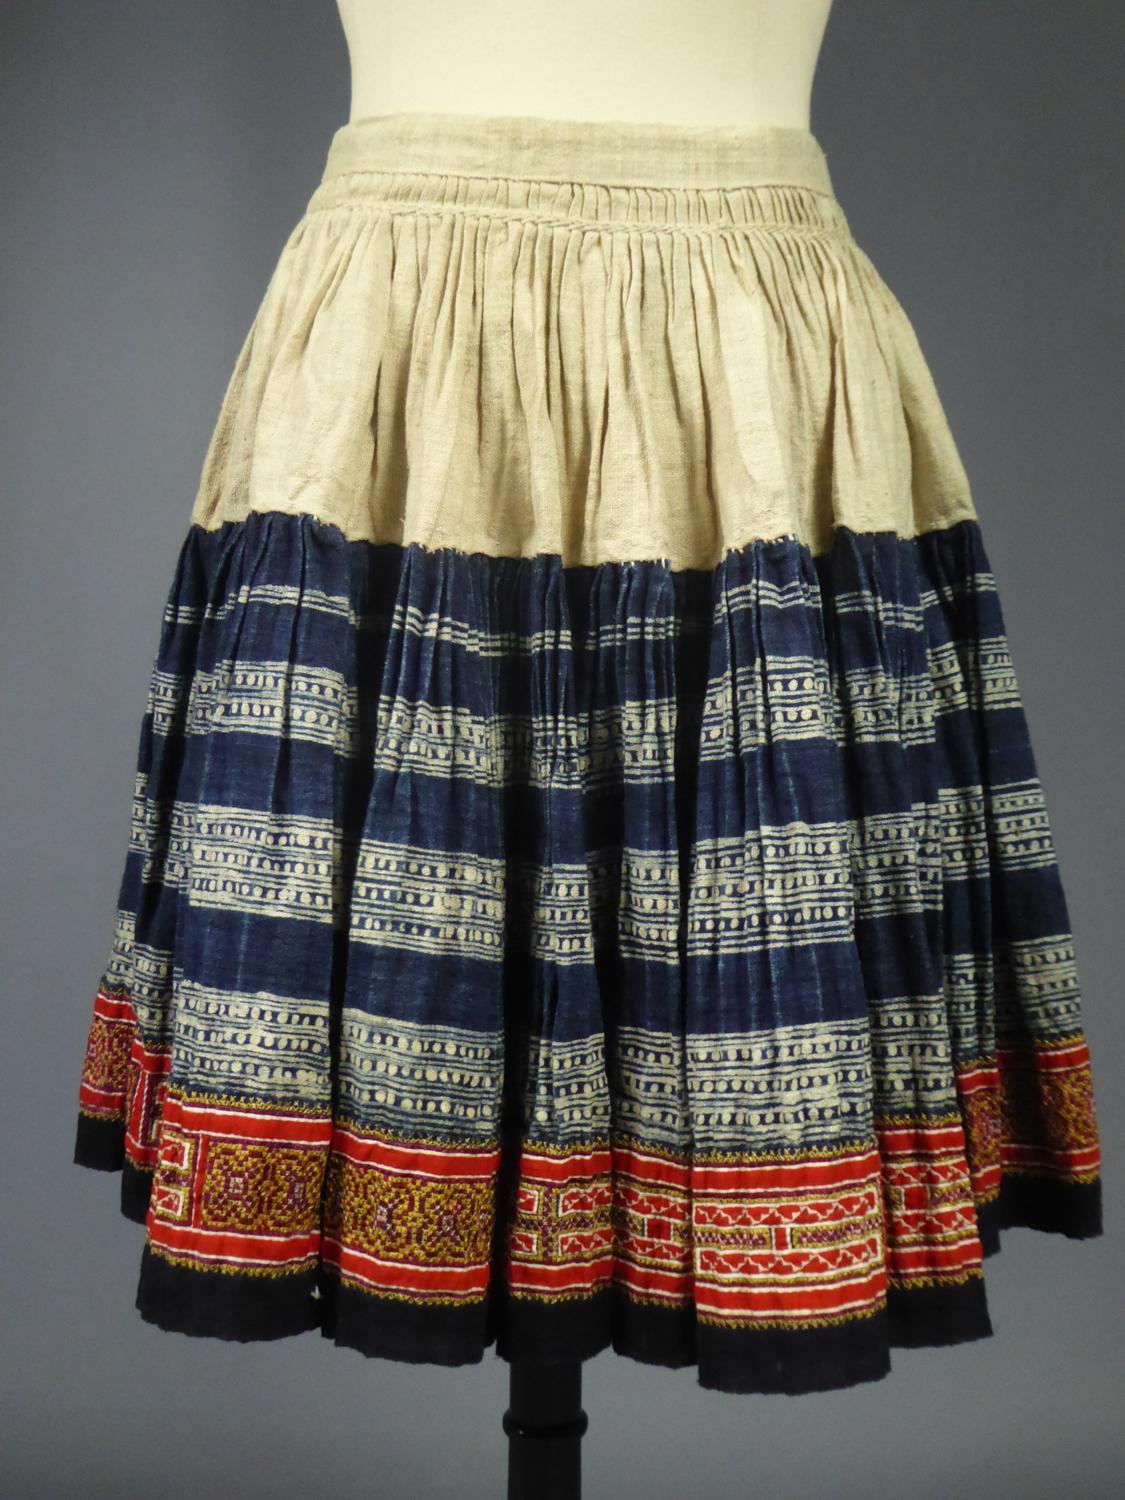 Miao - Hmong Pleated Skirt - Thailand Circa 1950 6